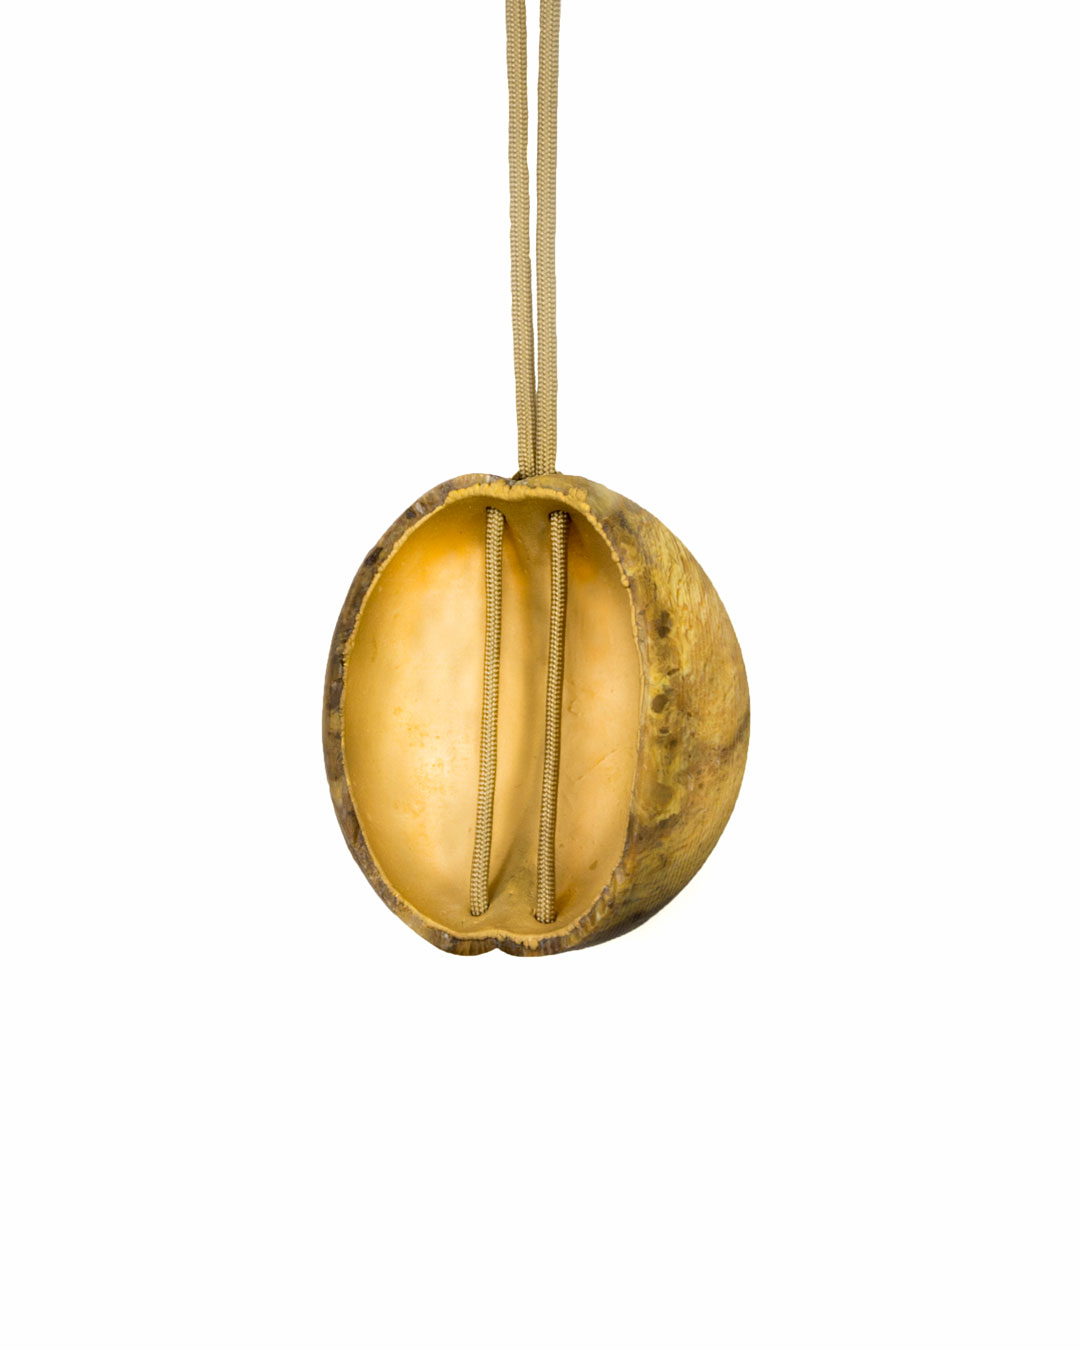 Edu Tarín, zonder titel, 2016, hanger; gele jaspis, koper, goud, 95 x 90 x 50 mm, €5450